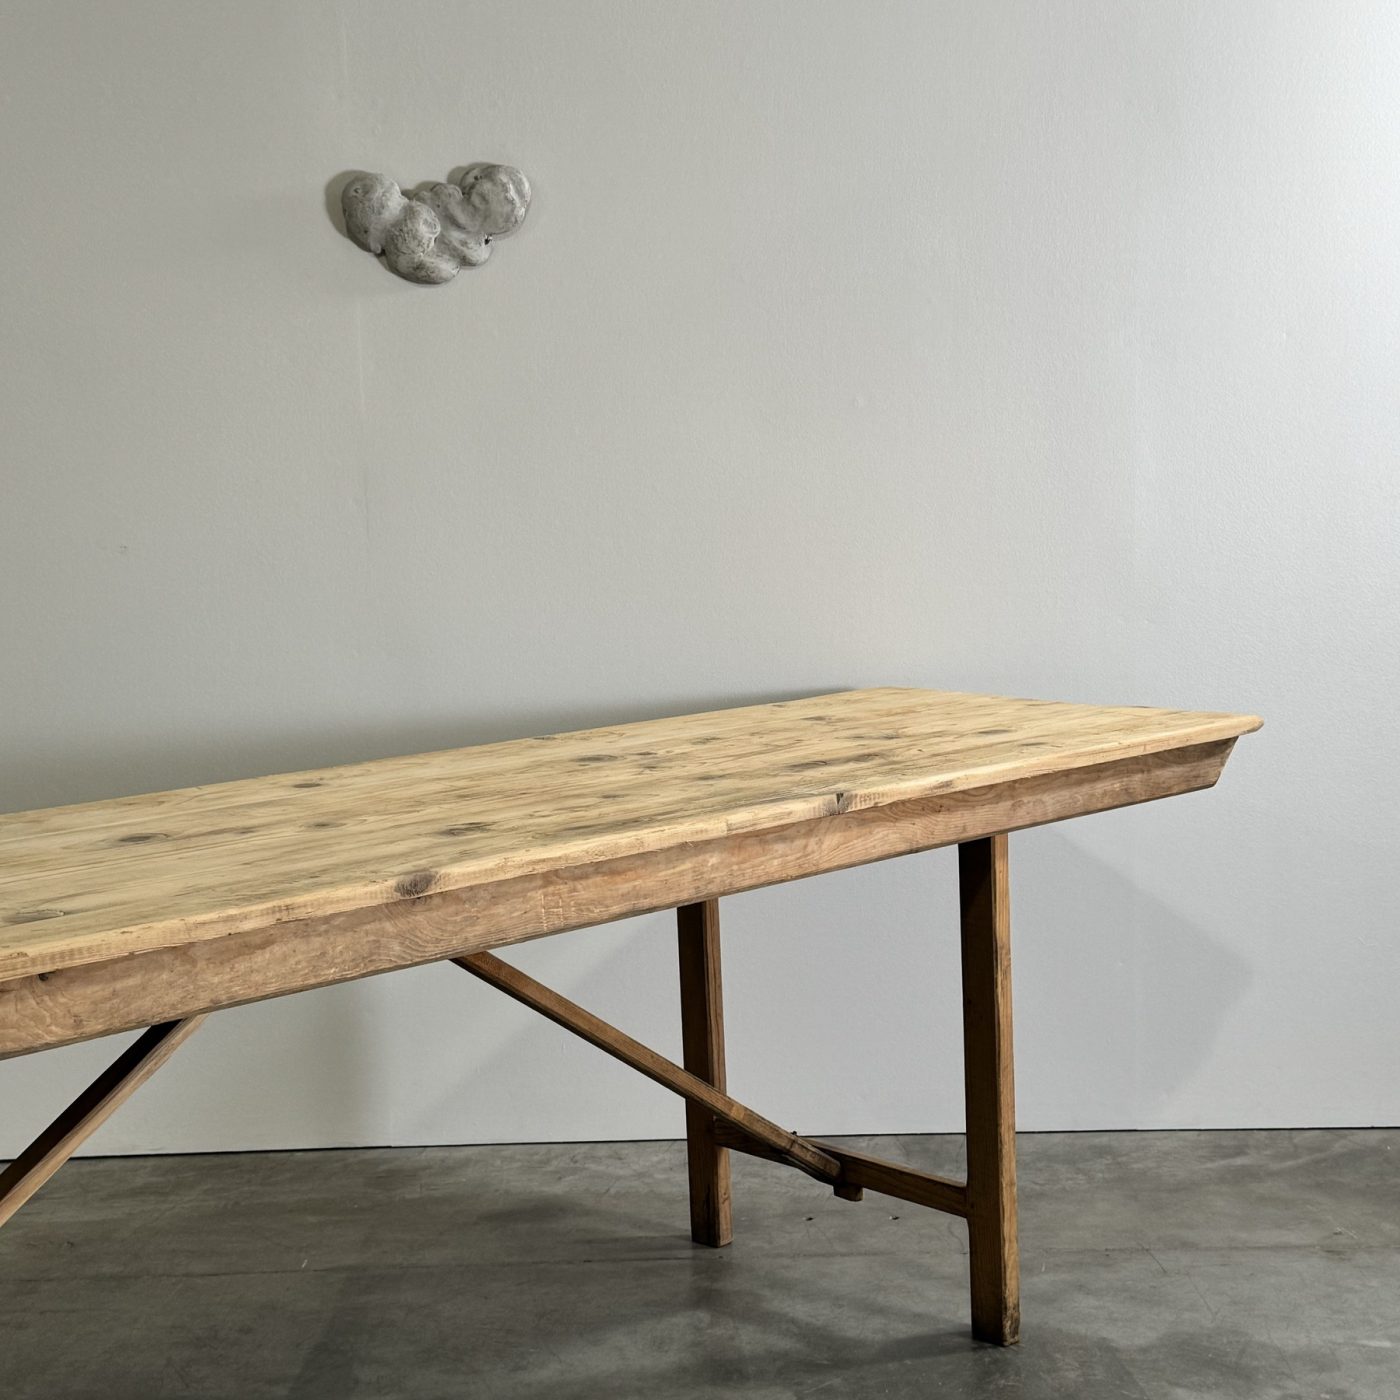 objet-vagabond-folding-table0005